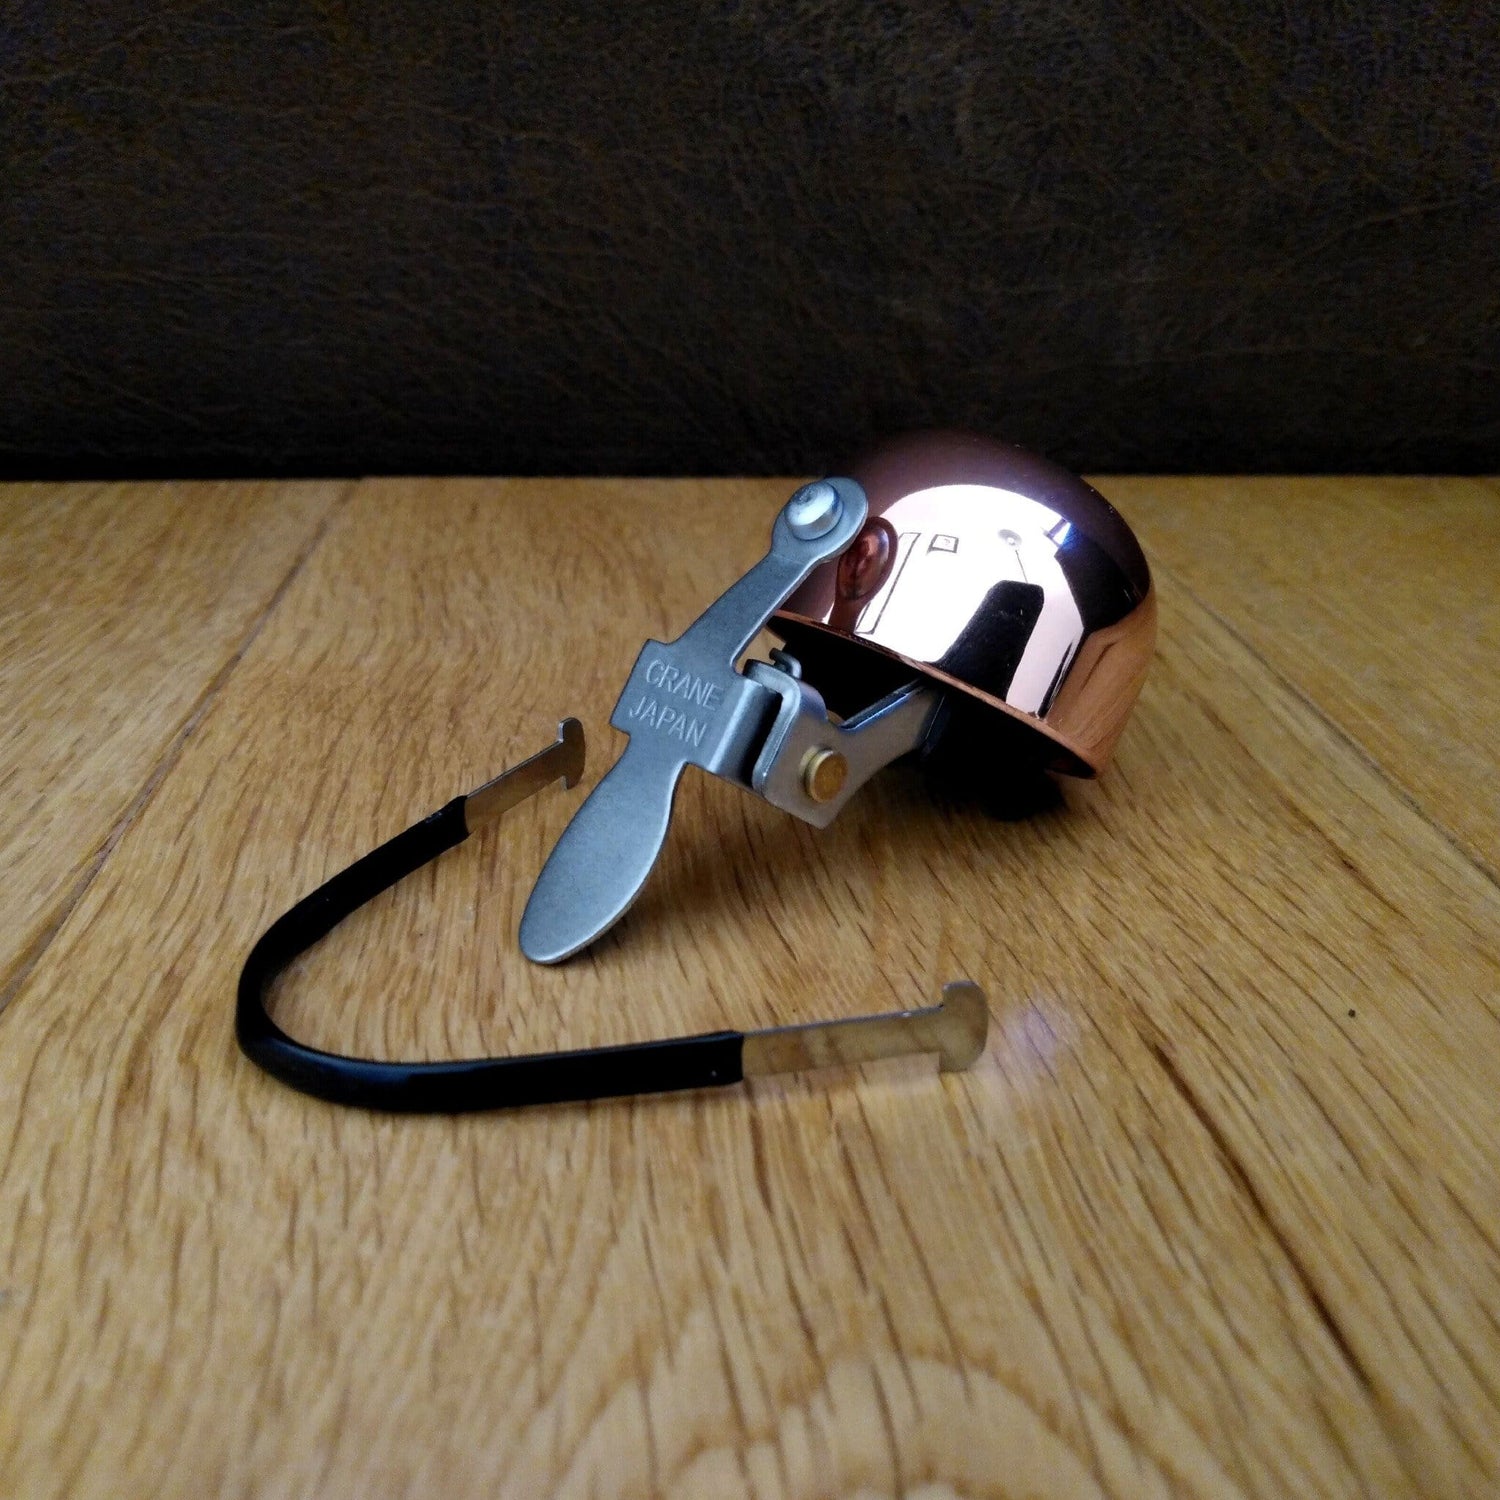 Crane Copper E-NE bike bell with clamp band mount